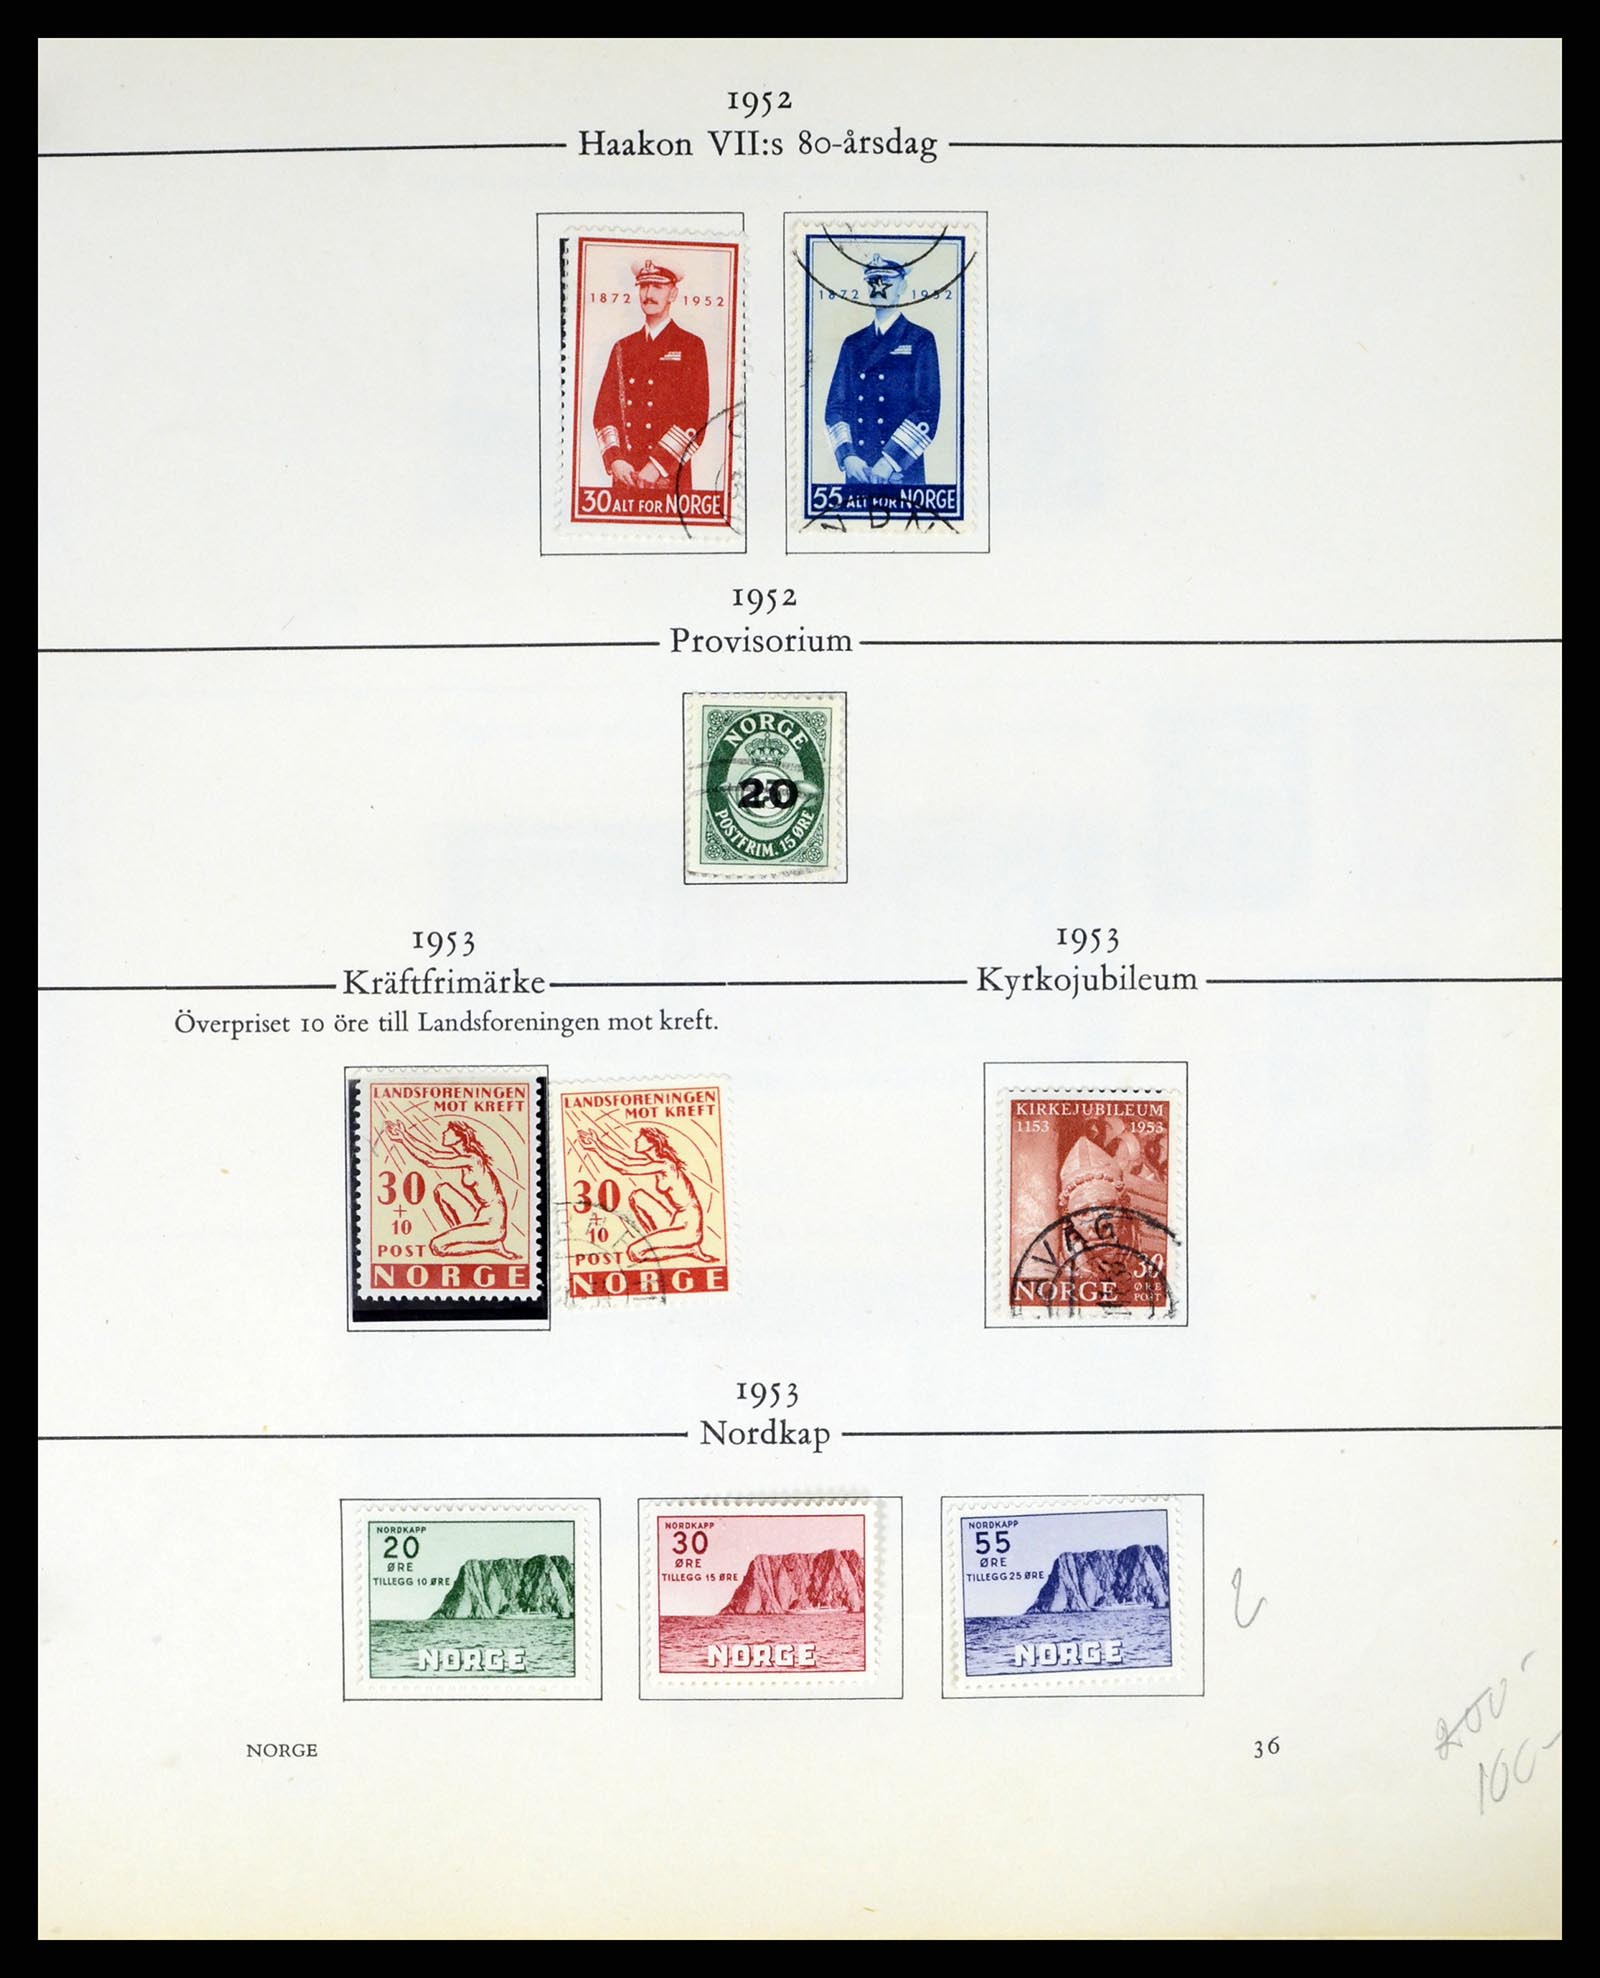 37387 037 - Stamp collection 37387 Scandinavia 1851-1960.